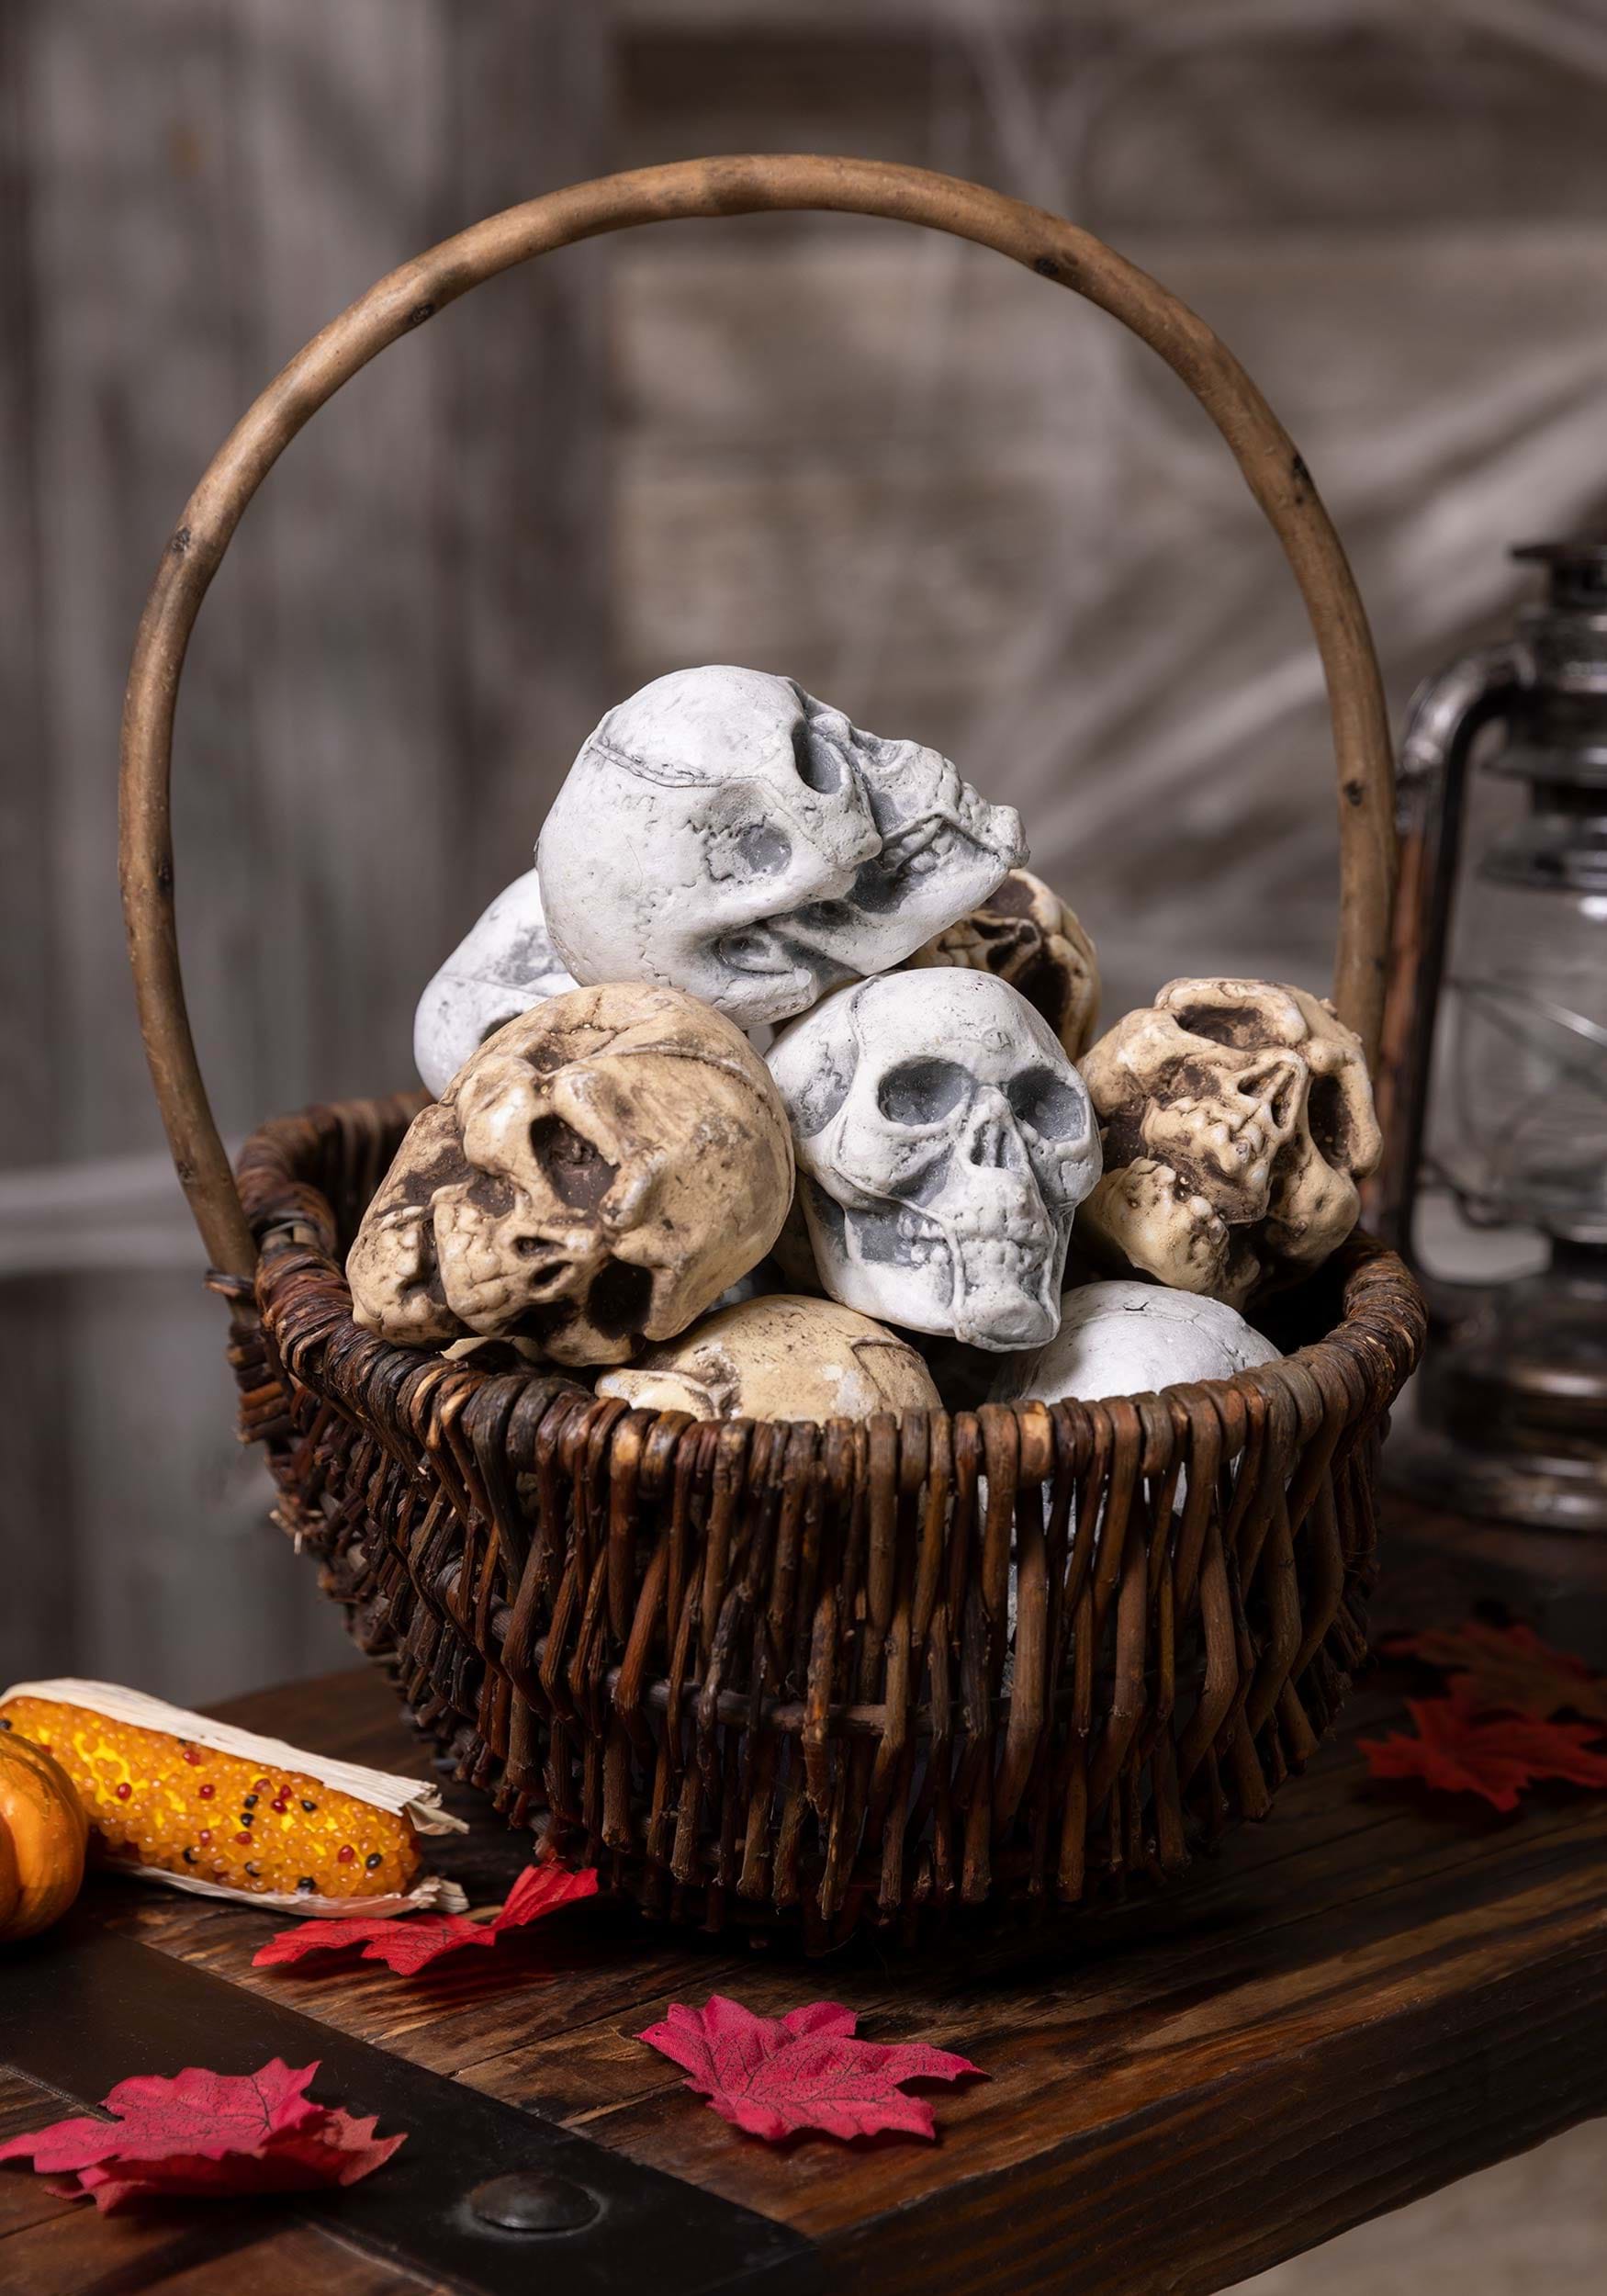 Skull Crossbones Black Fishnet Tights Hosiery Halloween Party UK